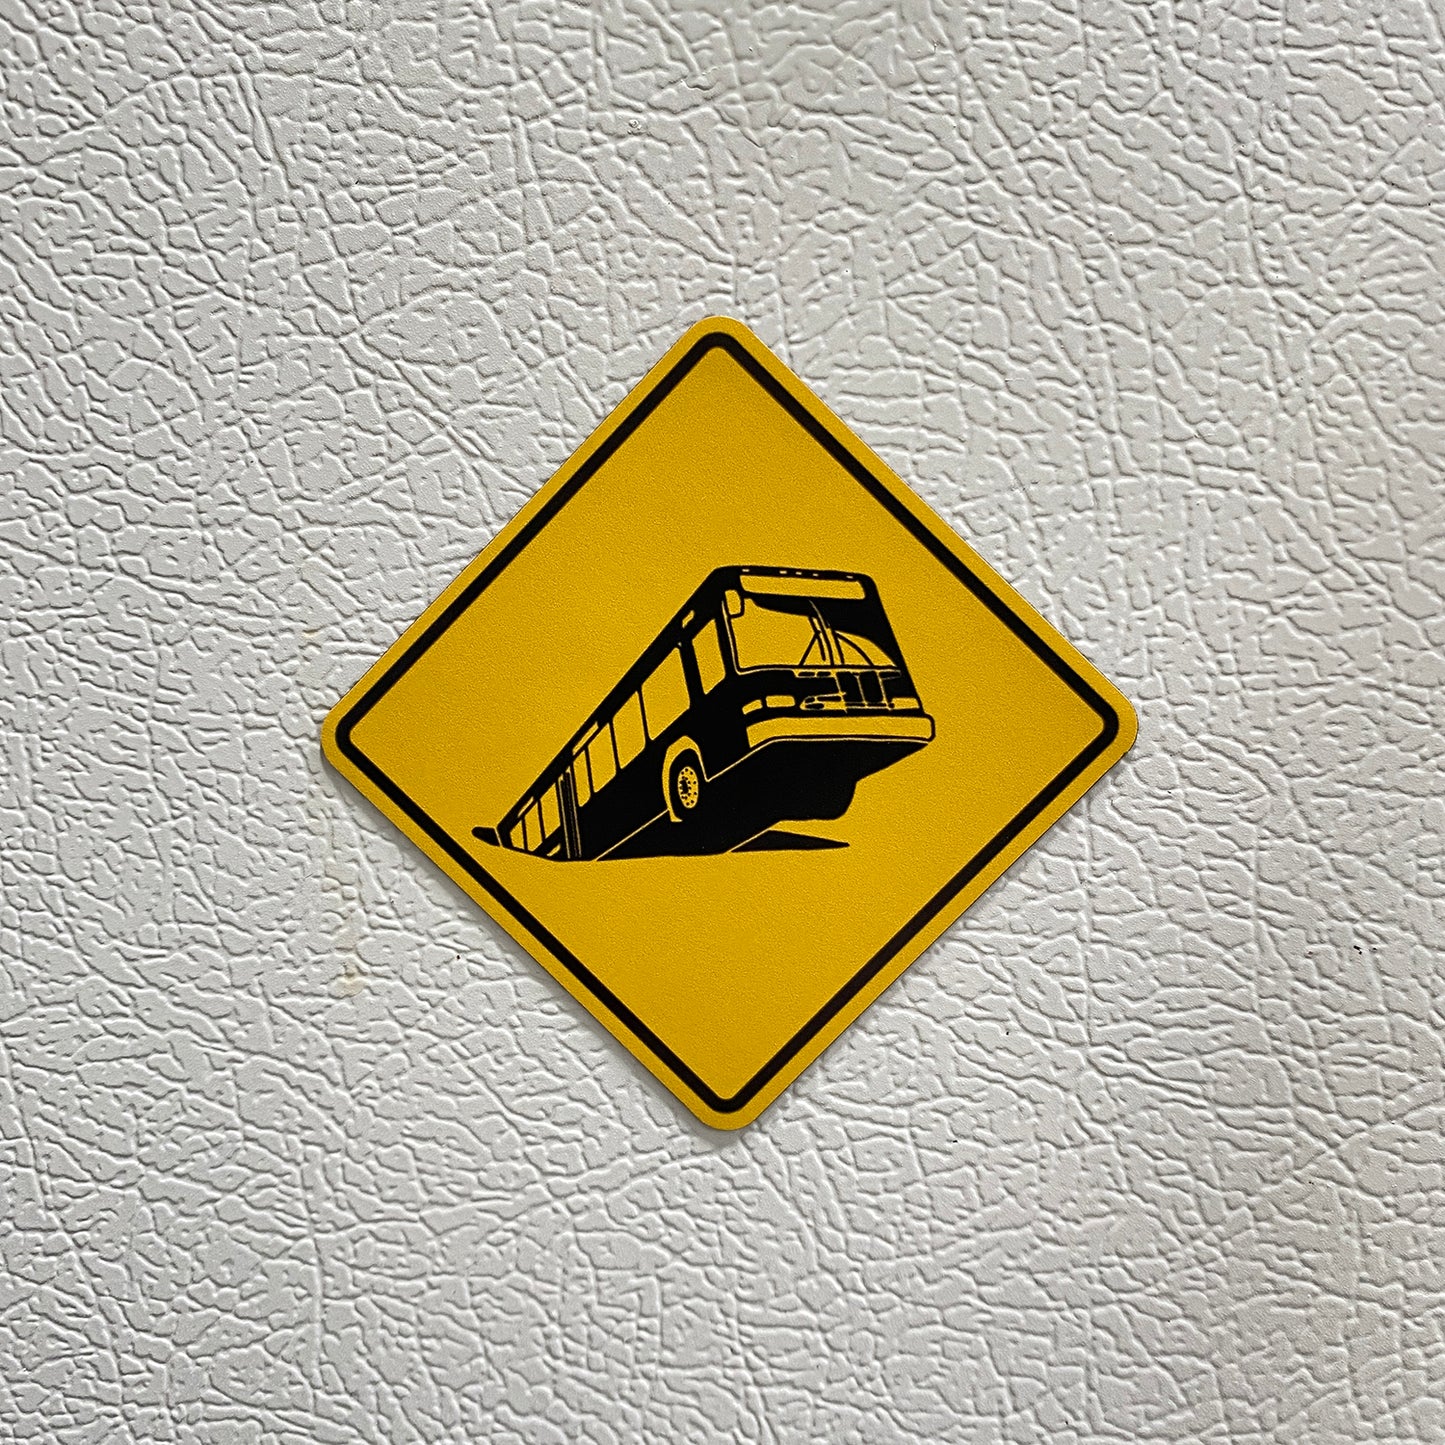 Sinkhole Bus Sign